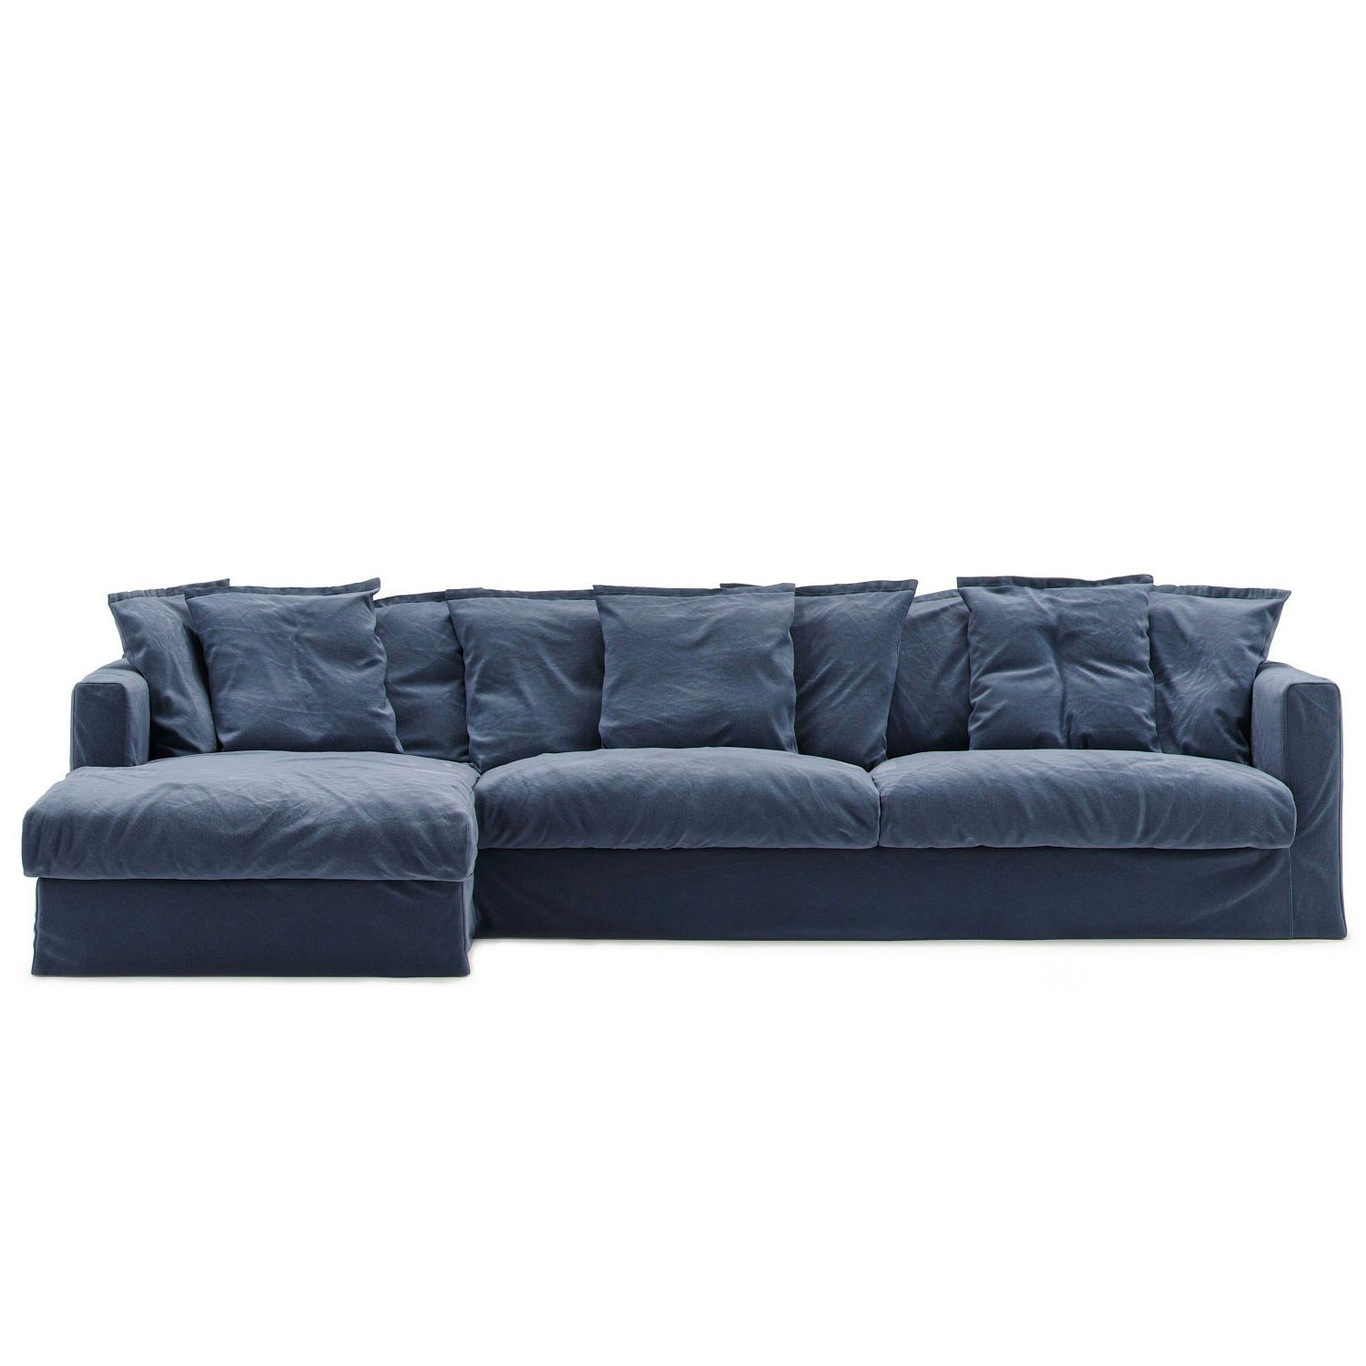 Le Grand Air Upholstery 3-Seater Cotton Divan Left, Blue